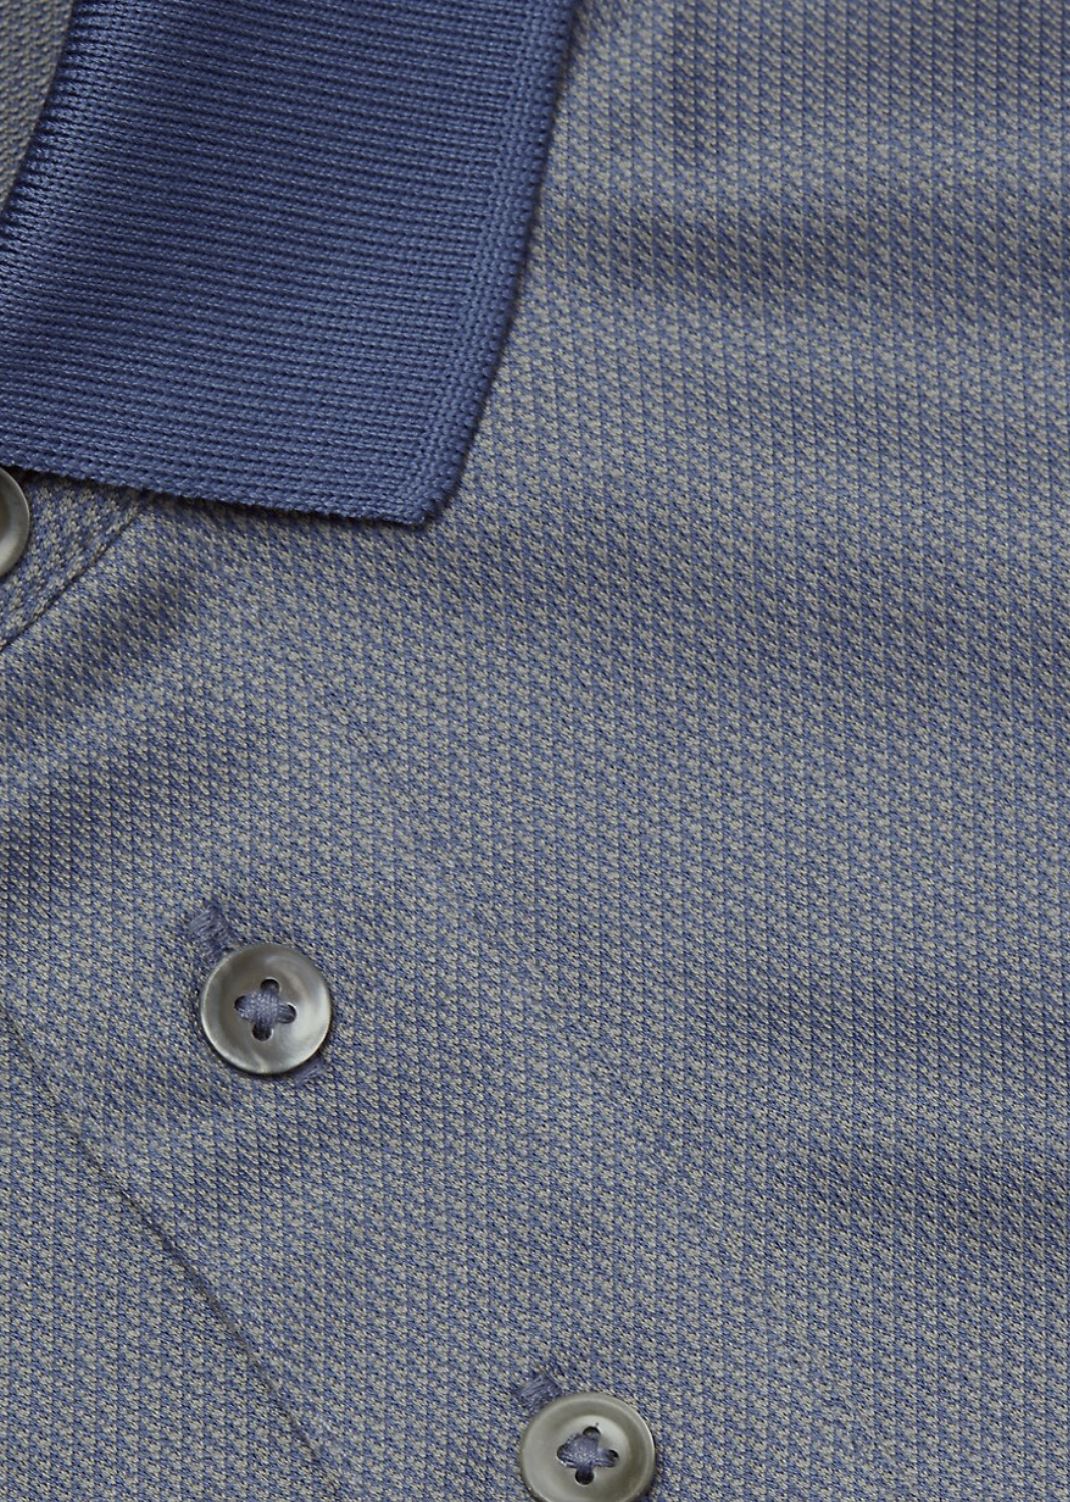 NWT $195 Emporio Armani Jacquard Micro-Print Polo Shirt Blue Grey XL